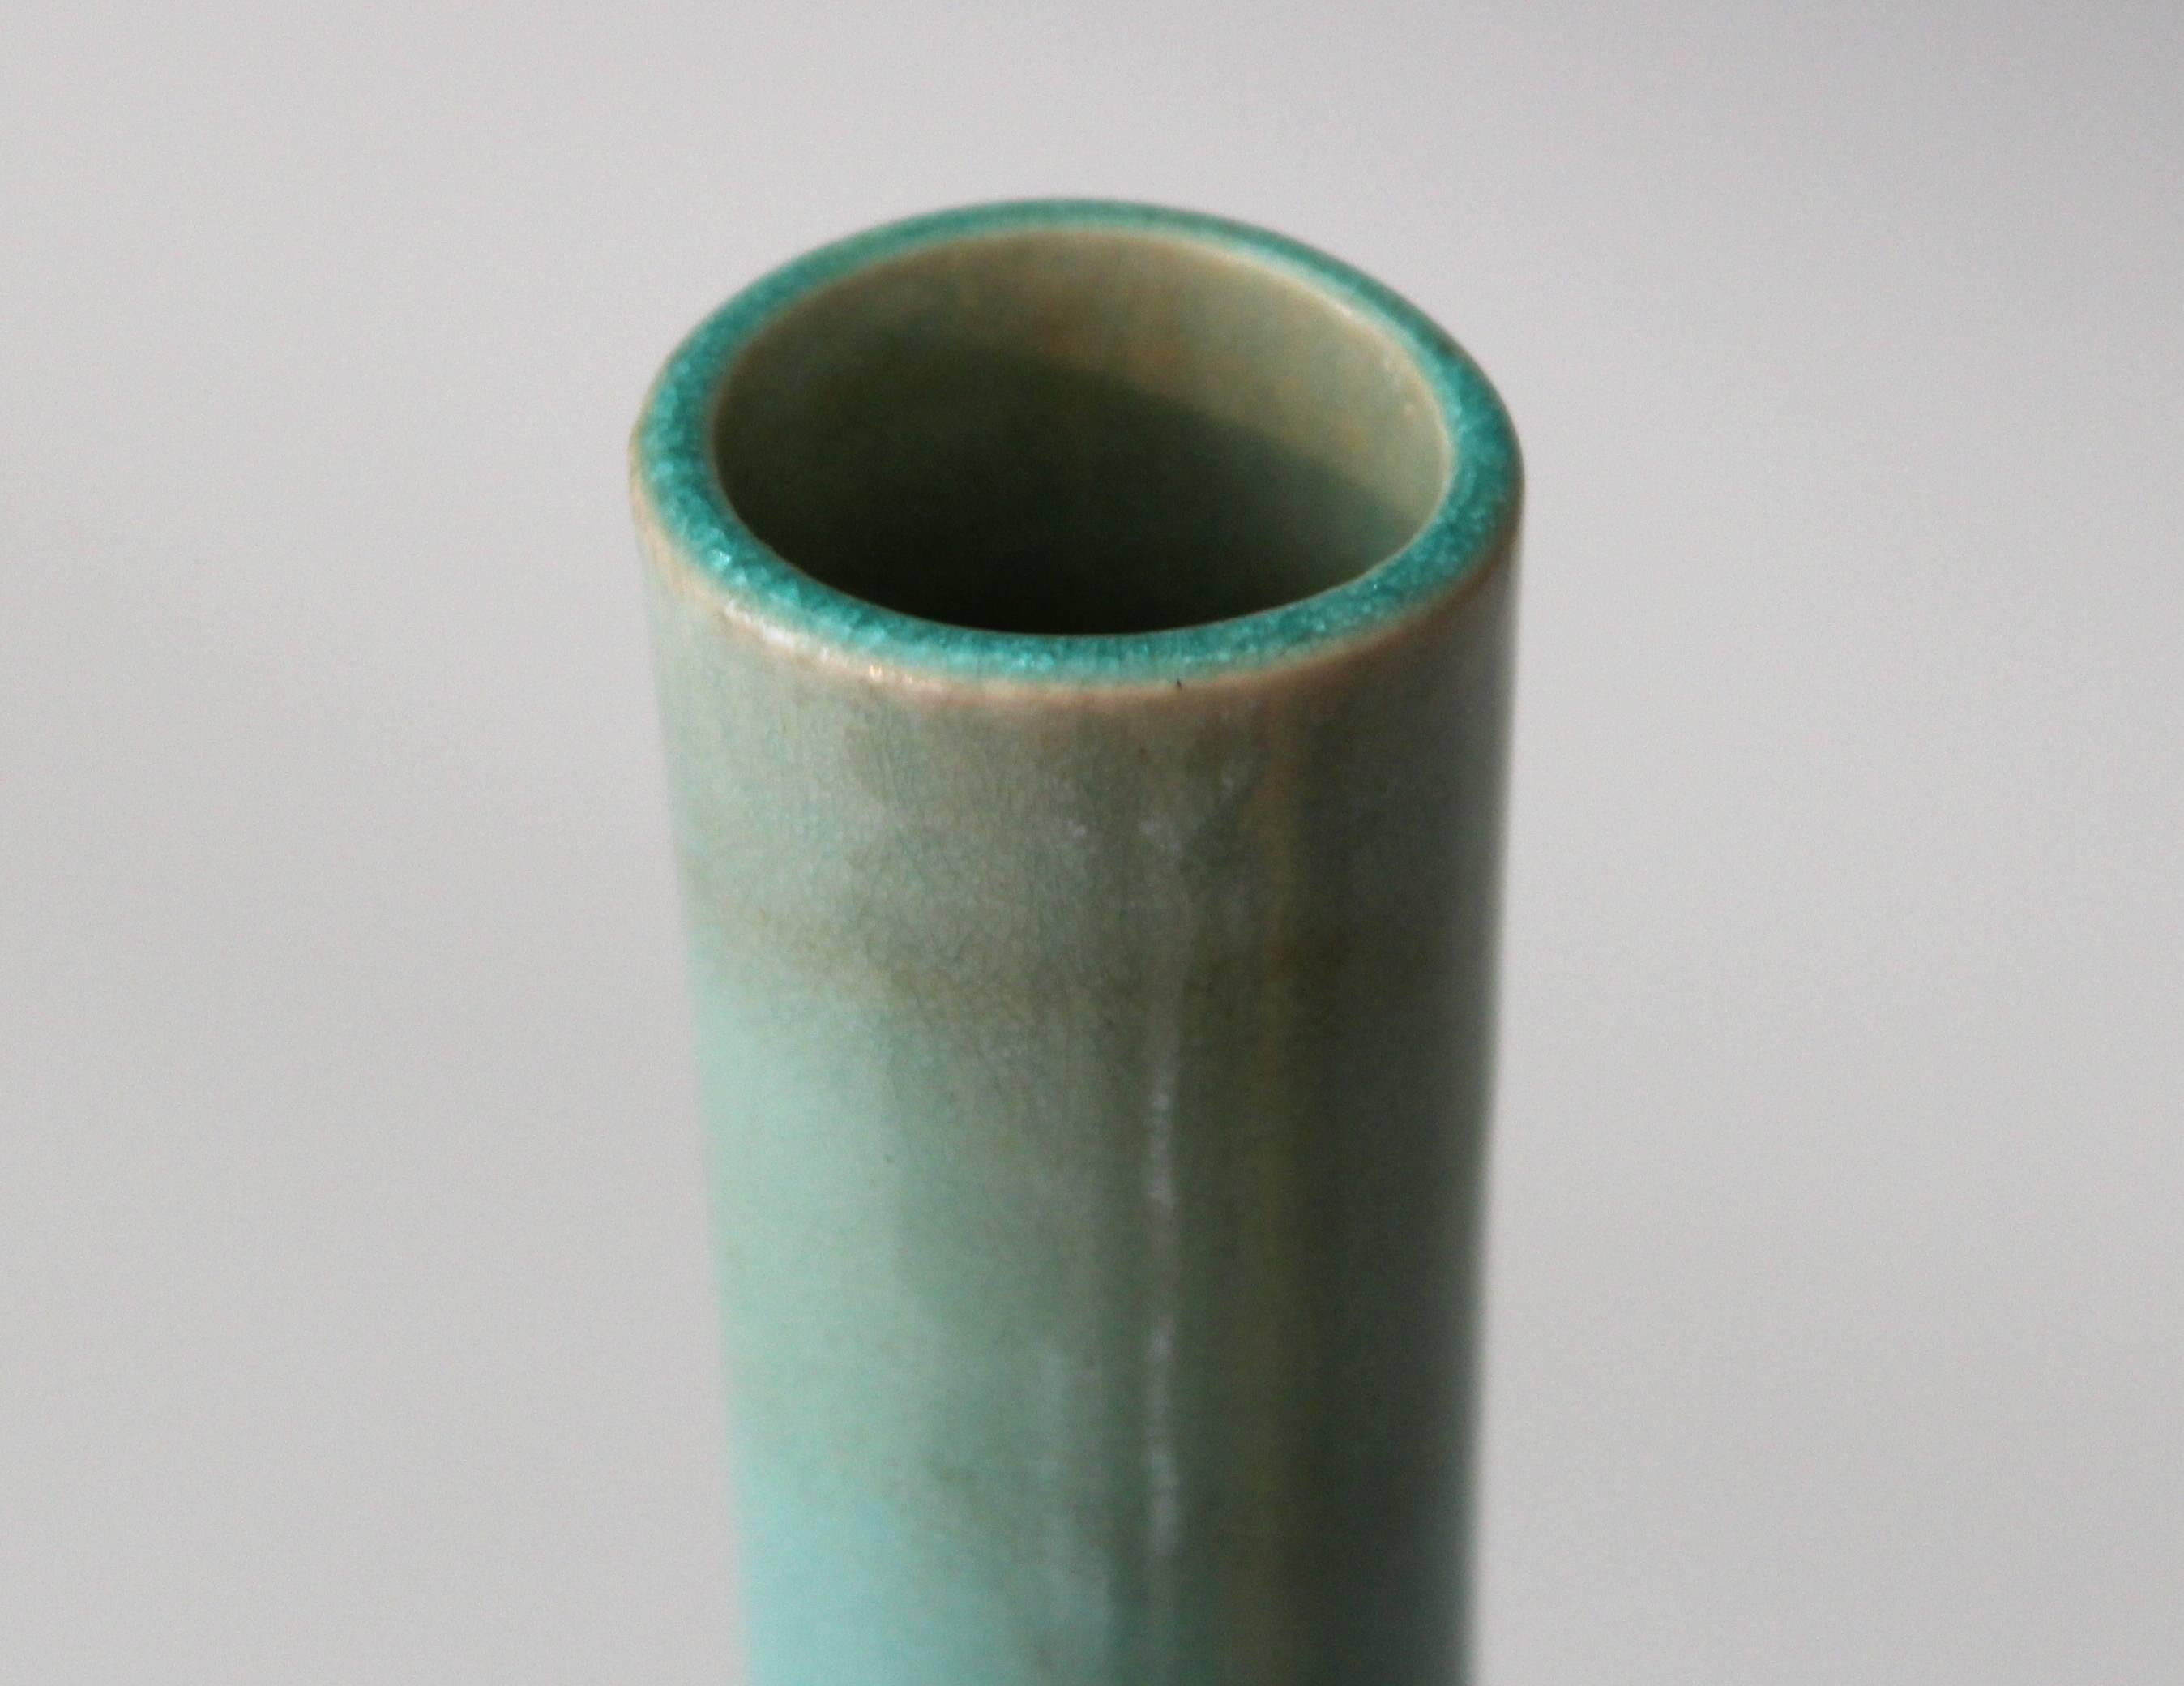 Japanese Collection of Awaji Pottery Monochrome Bottle Vases